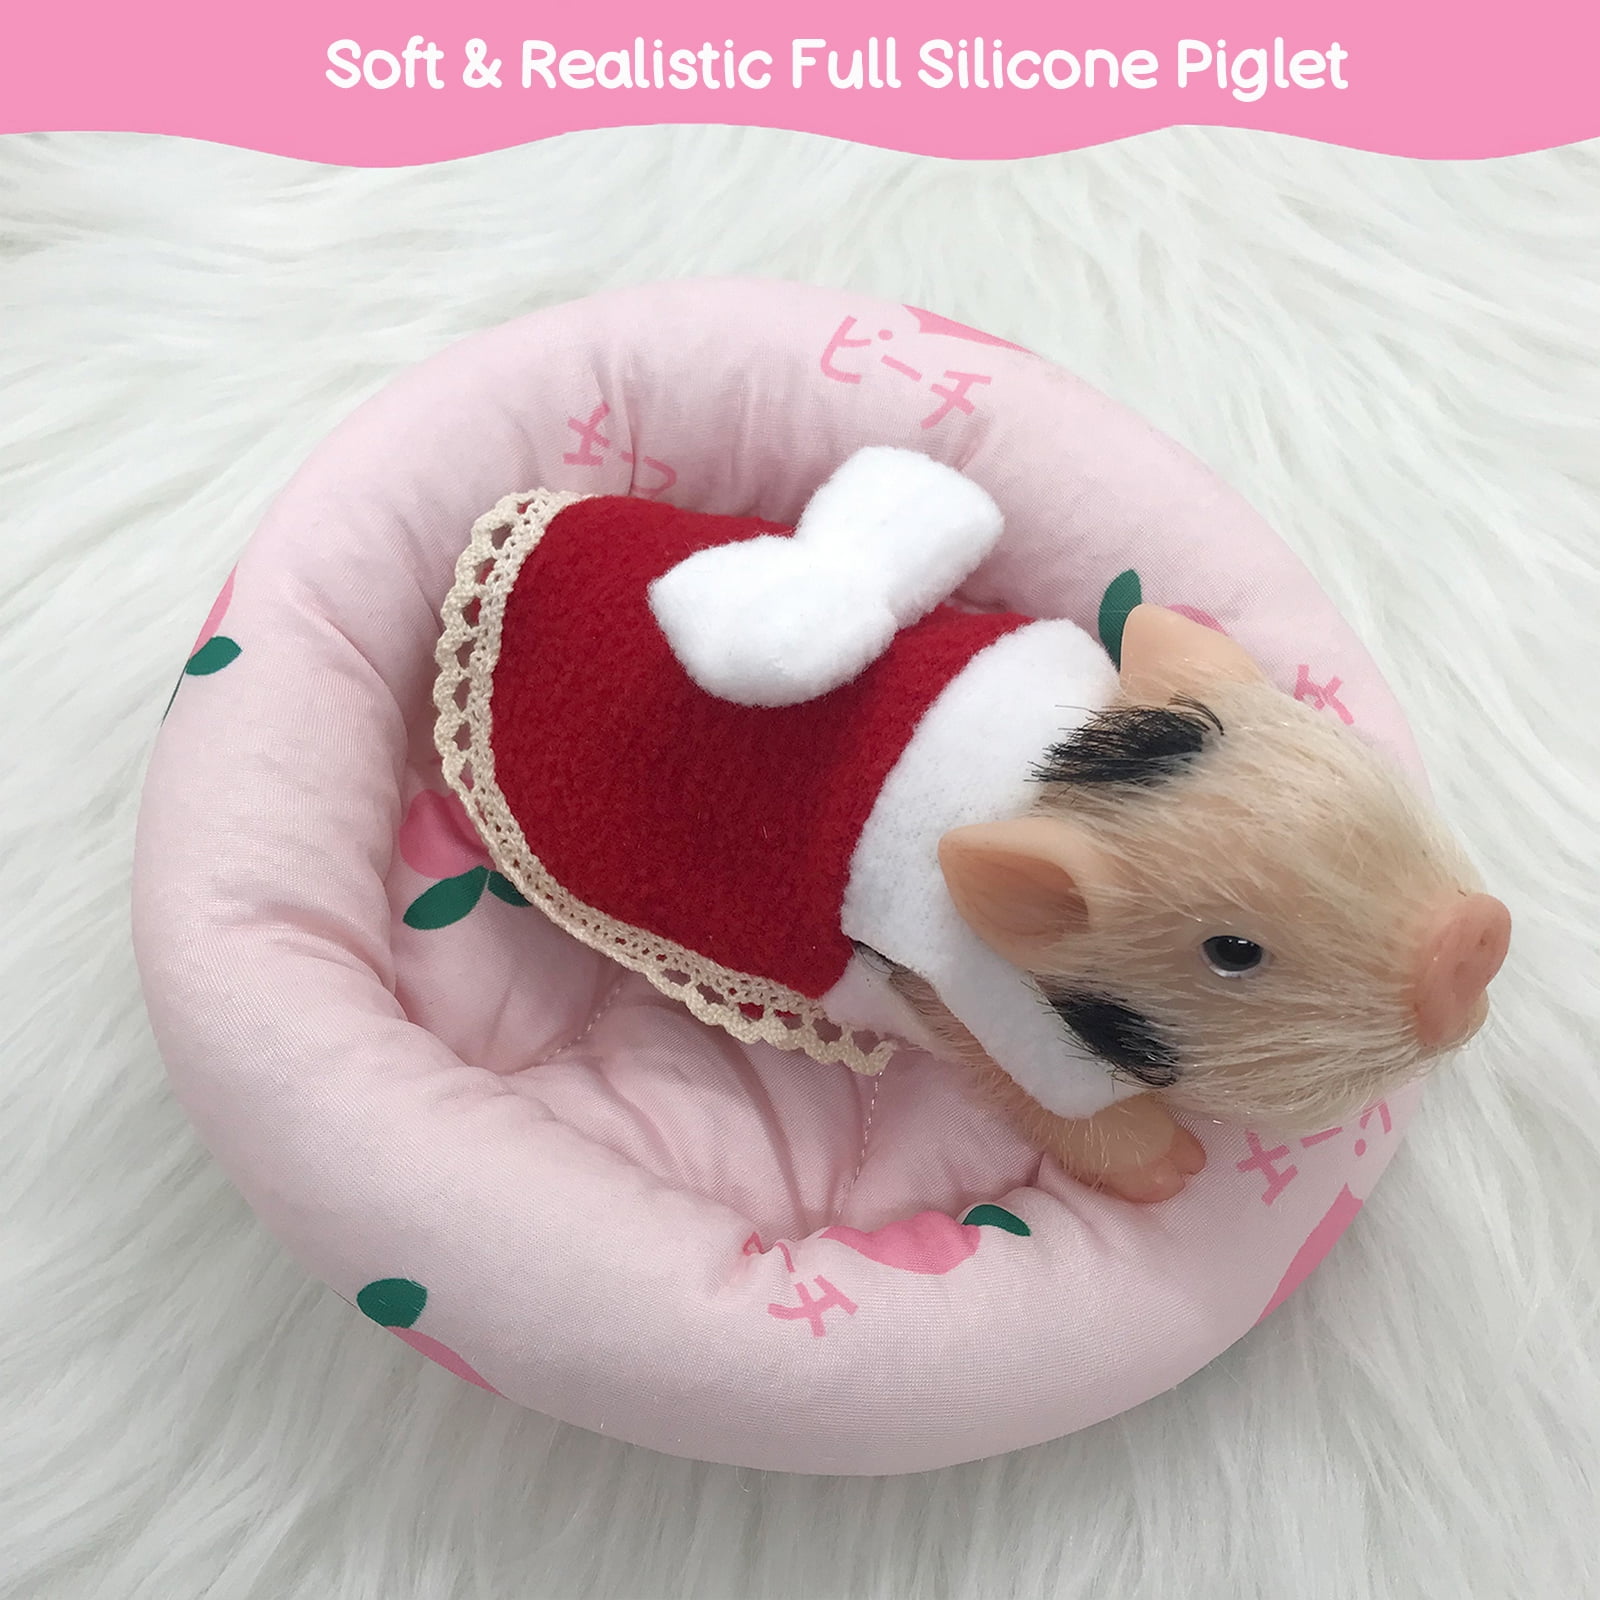 VOLOBE 5 Inches Silicone Piglet, Soft Mini Realistic Silicone Animals Pets  with Silicone Piglet Accessories for Kids Boy Girl Birthday (Tony)